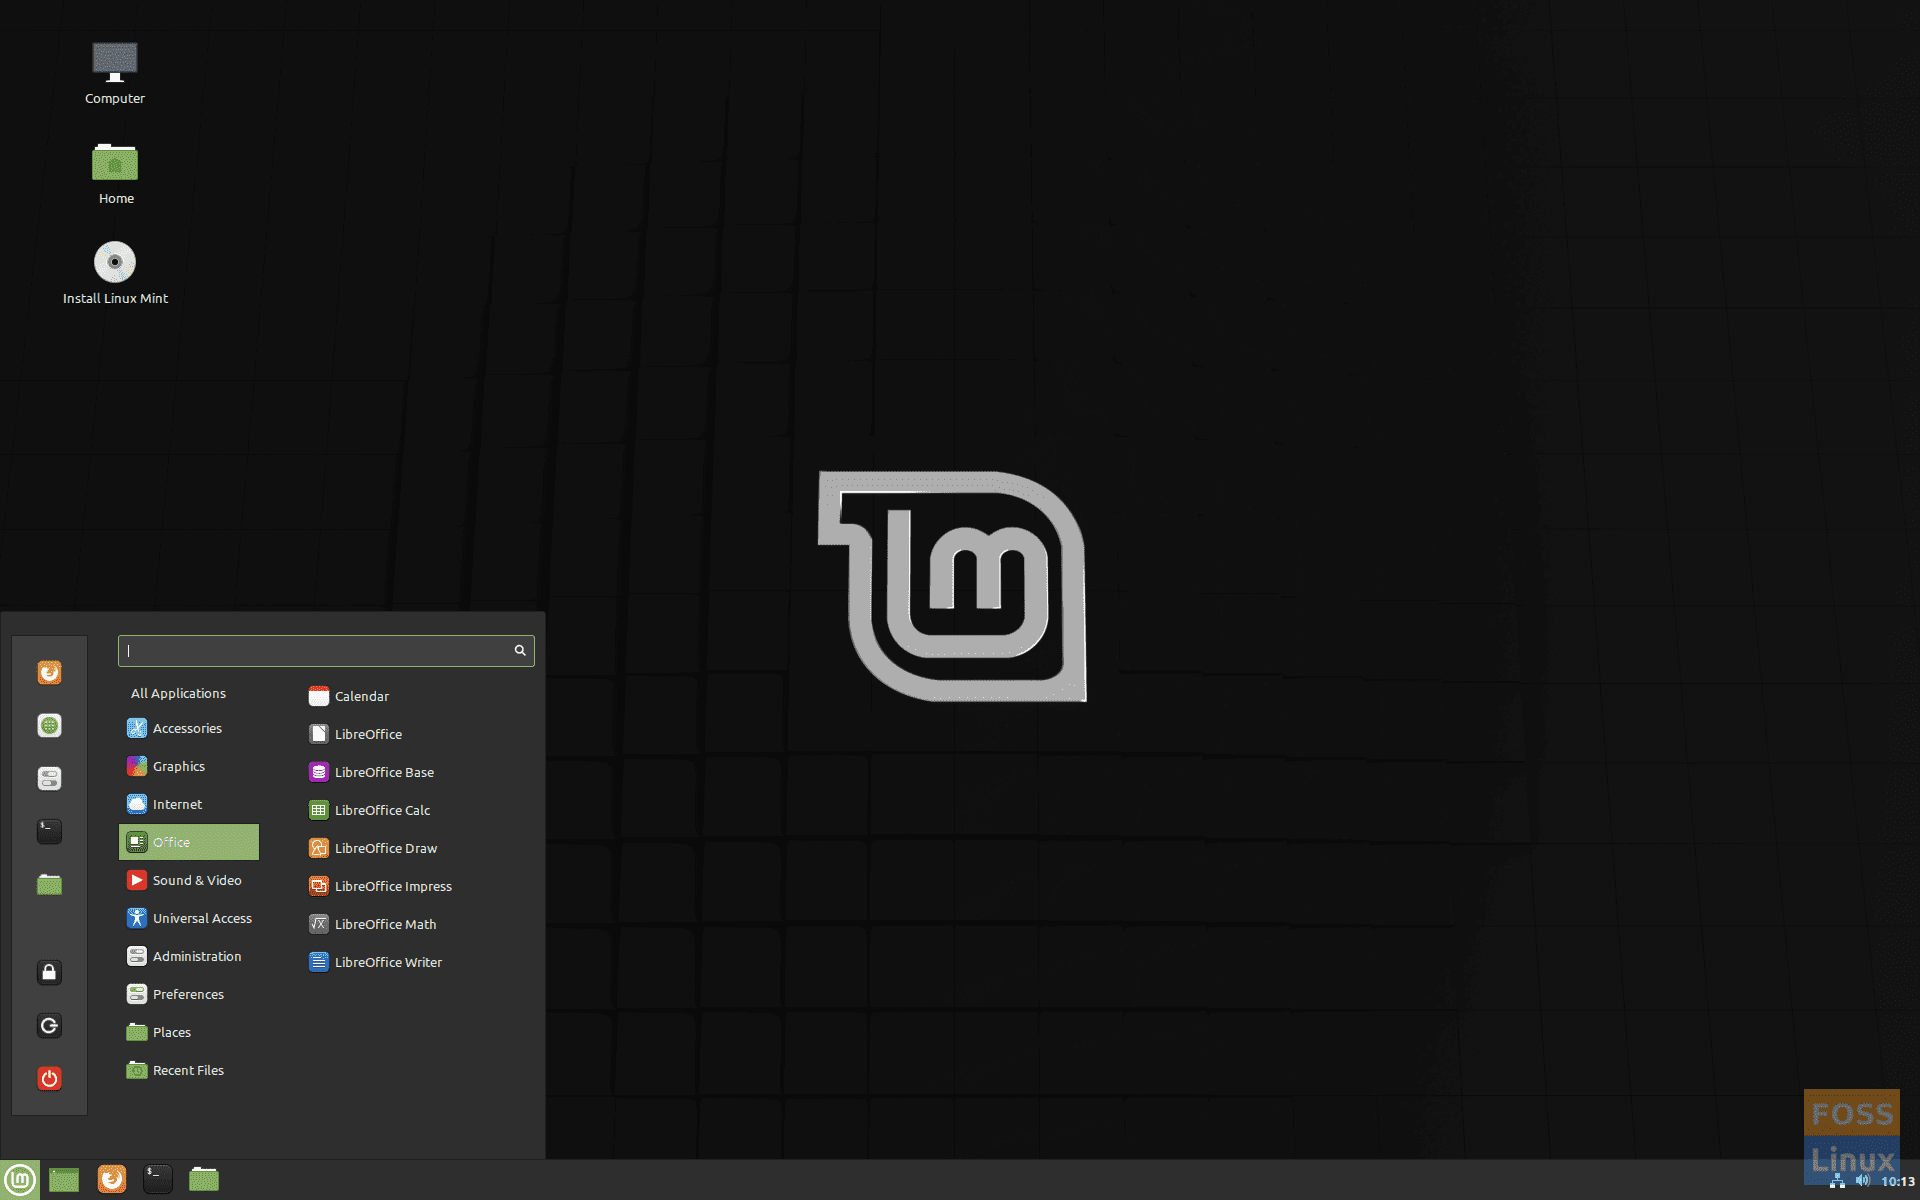 Linux Mint 19.3 - Cinnamon Desktop